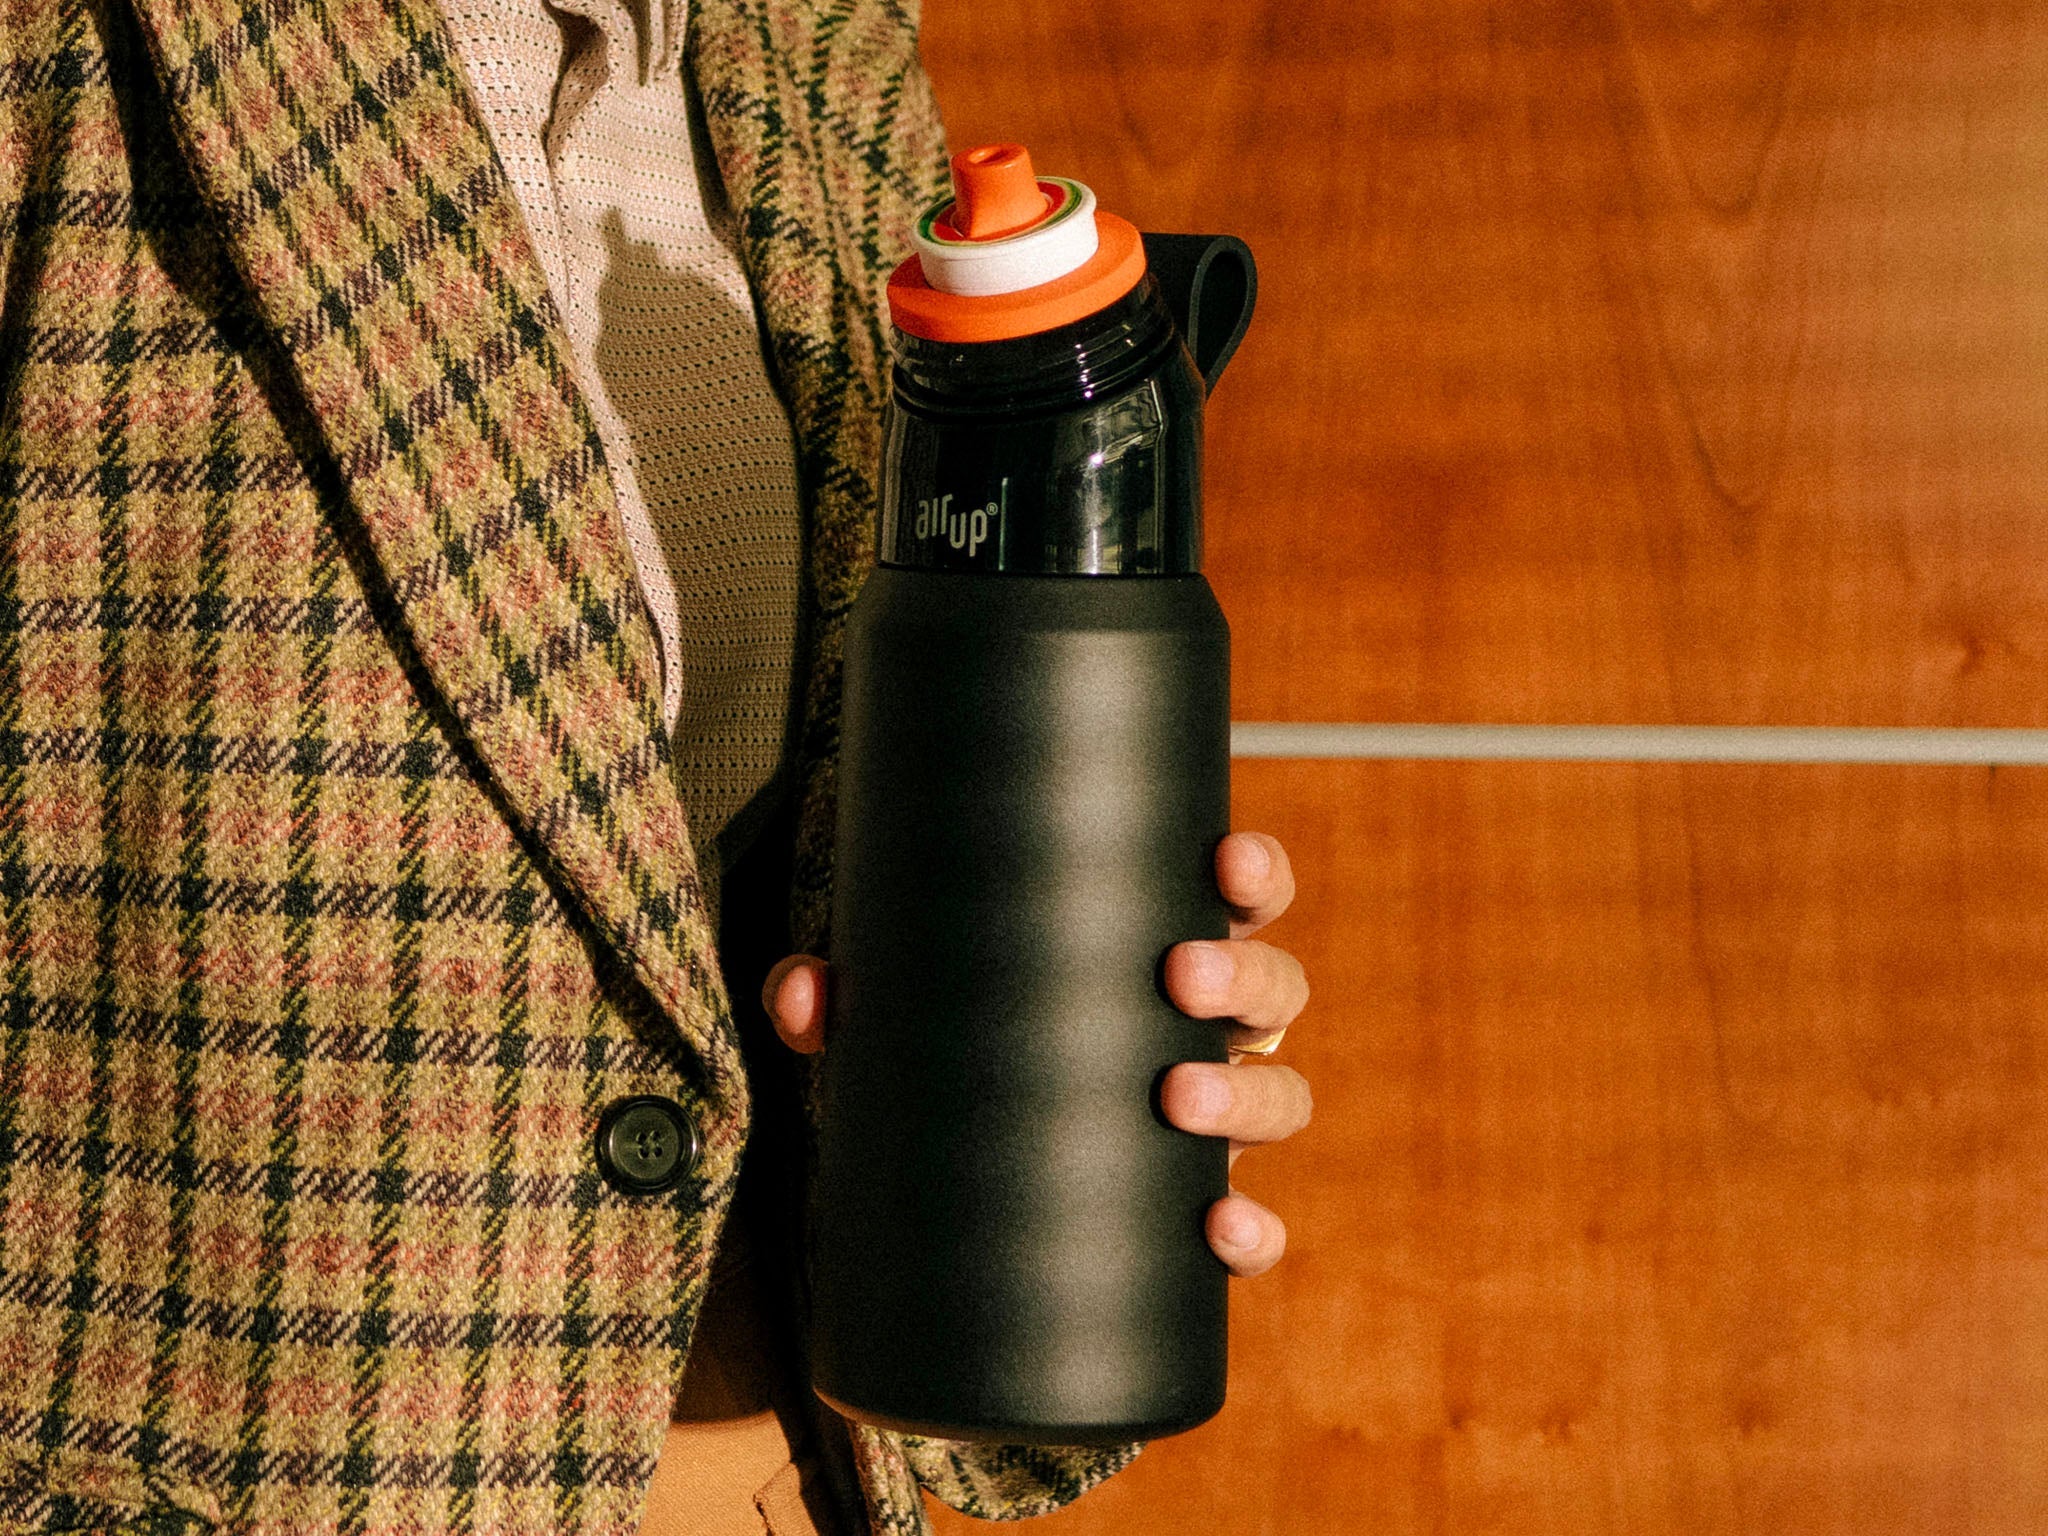  Air Up Water Bottle Flavour Pods Pack, Air Up Water Bottle  Flavour Pods Scented Fruit Infuser Water Bottle Scented Cartridge, Air Up  Water Bottle Flavour Pods（Cola flavor 5pcs） : Sports 